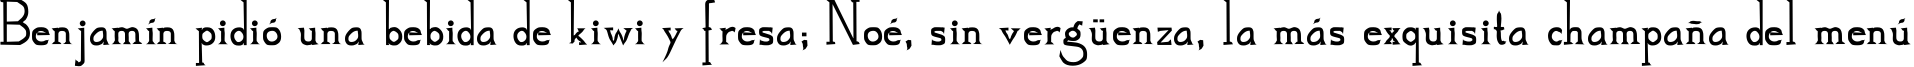 Пример написания шрифтом Mestra текста на испанском